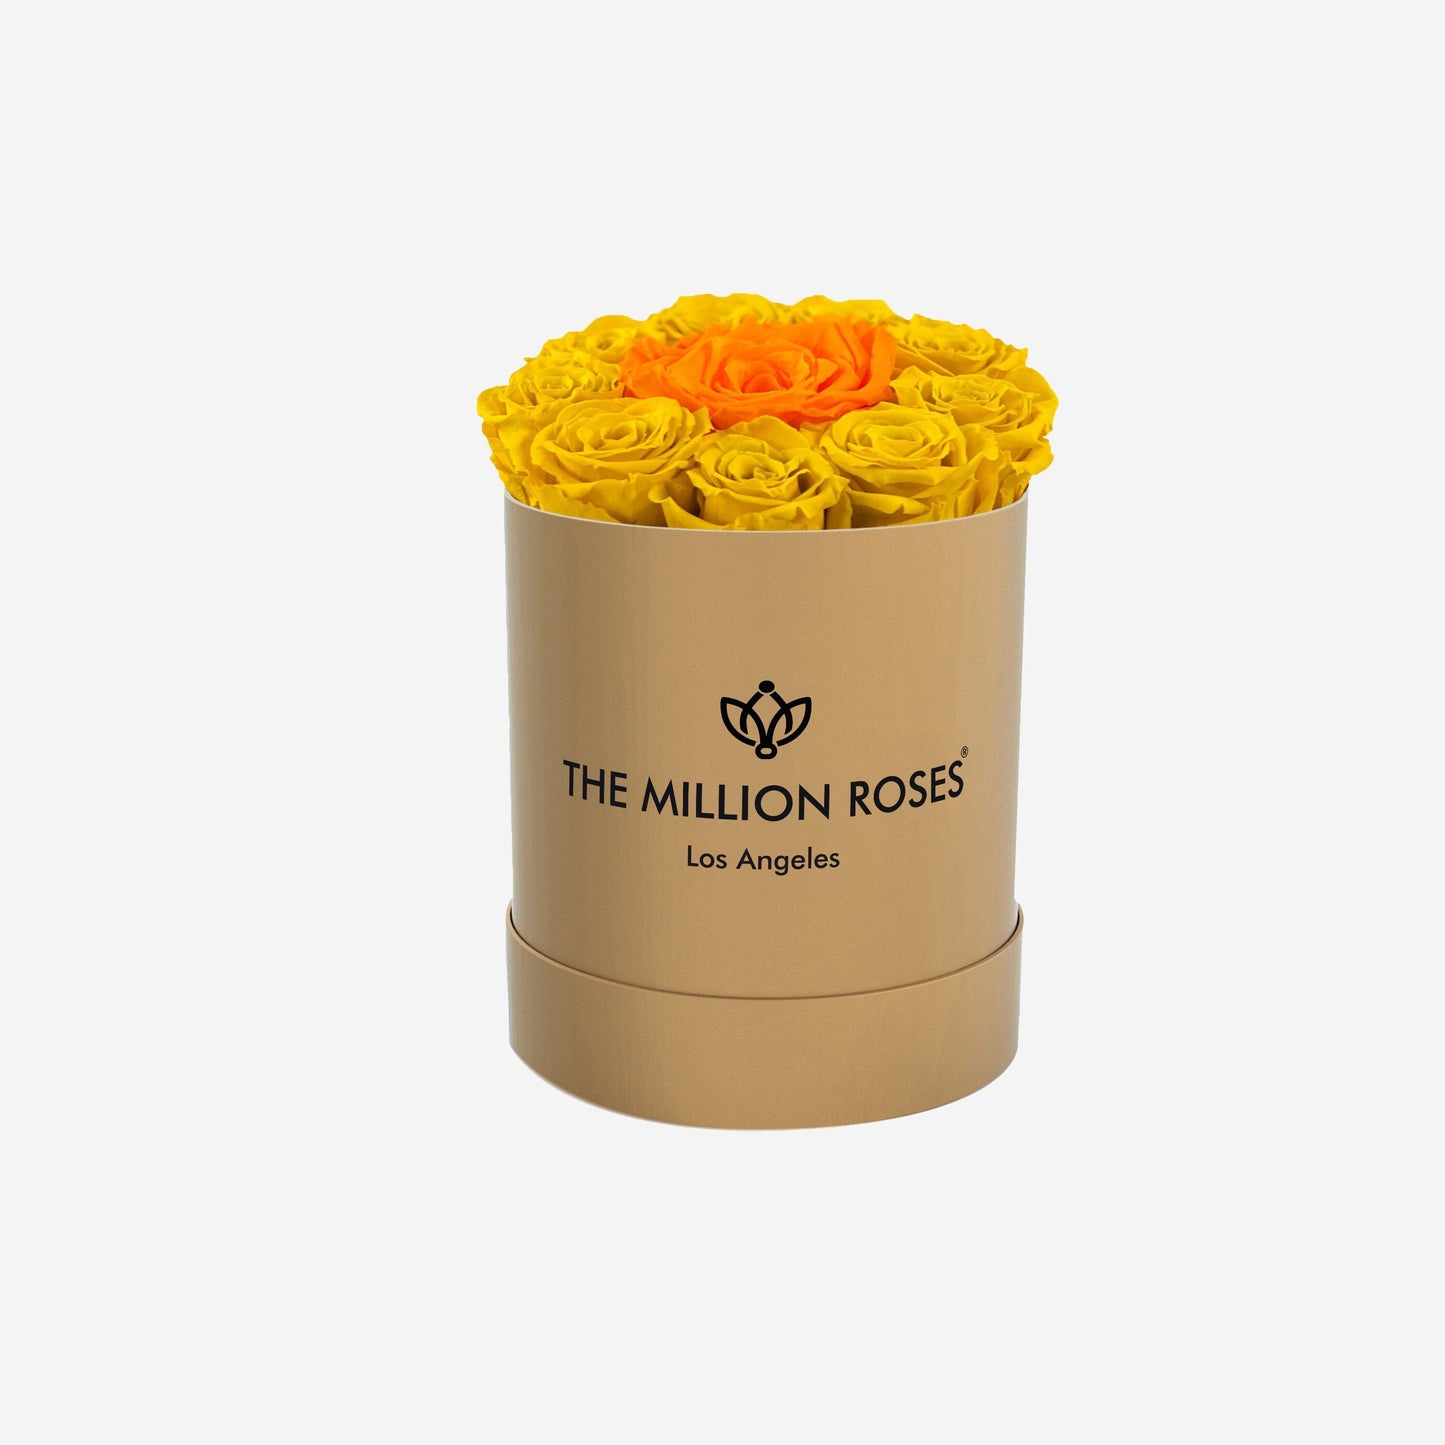 Basic Gold Box | Yellow & Orange Mini Roses - The Million Roses